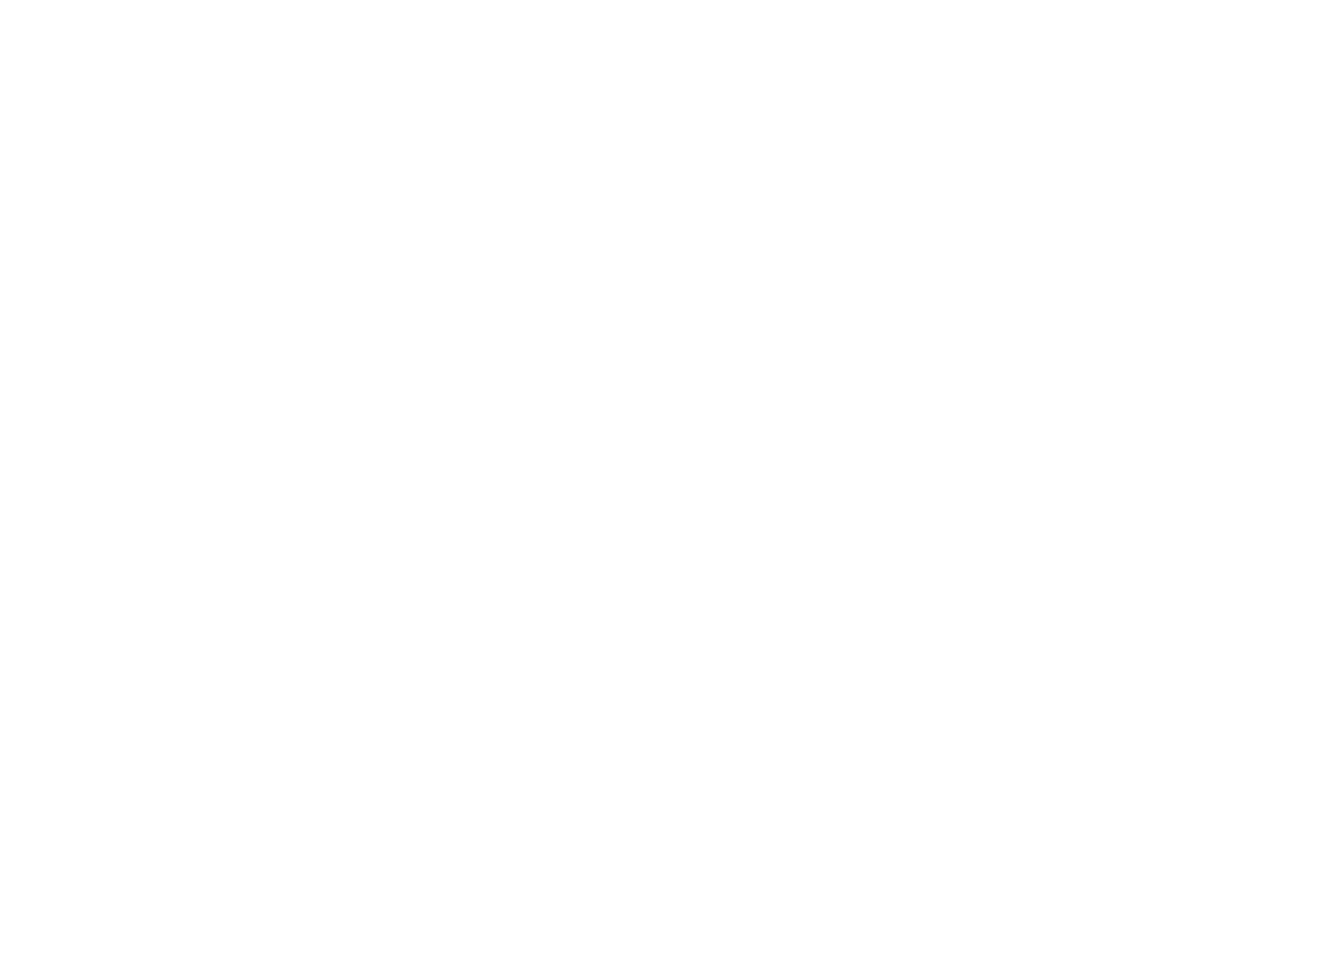 Diana Lynn Interiors